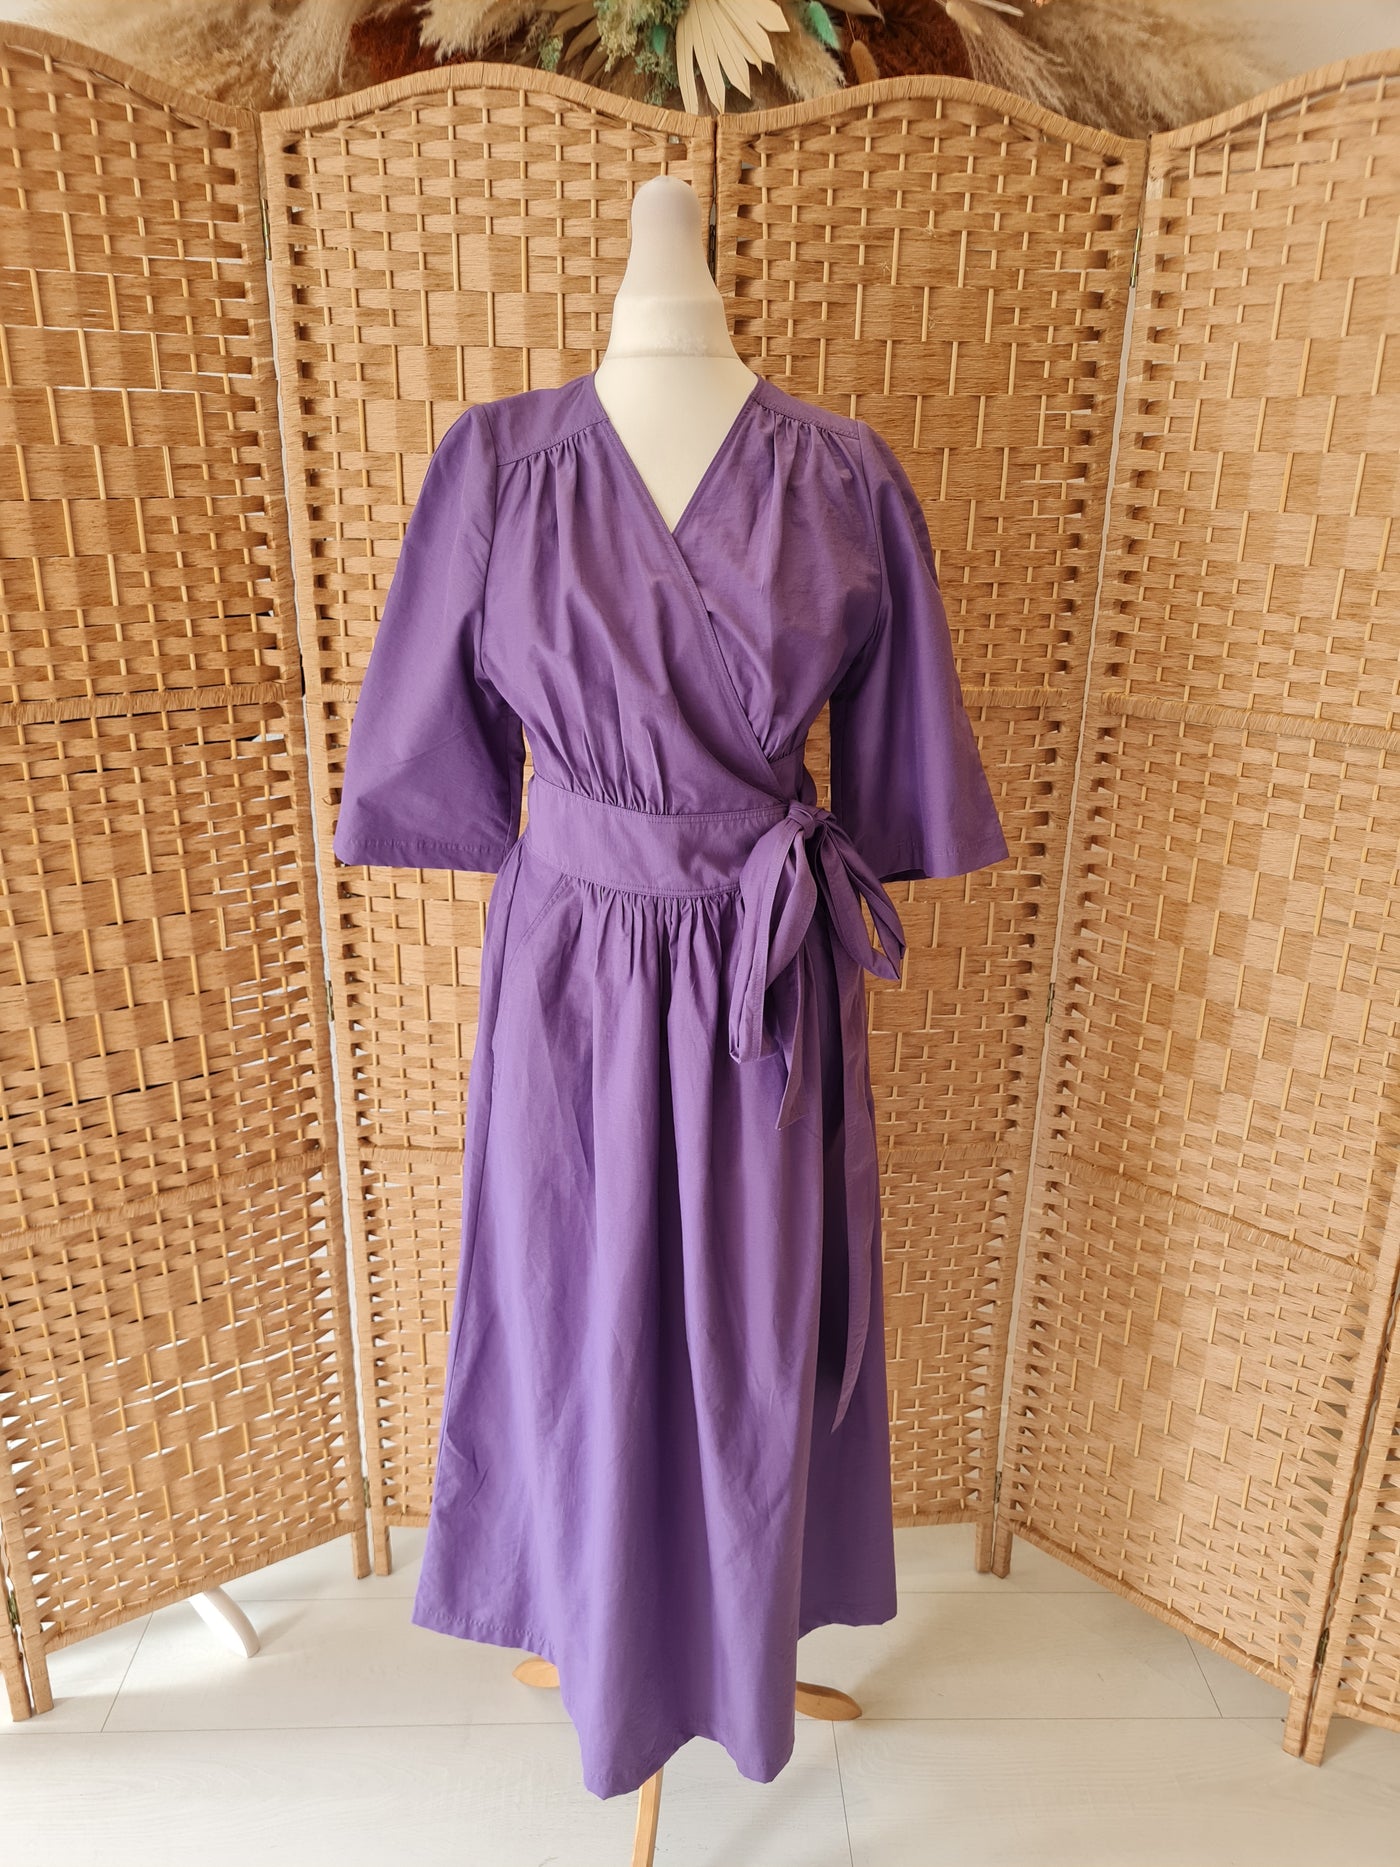 & Other Stories Purple Wrap Dress Size 36 NTW RRP £120